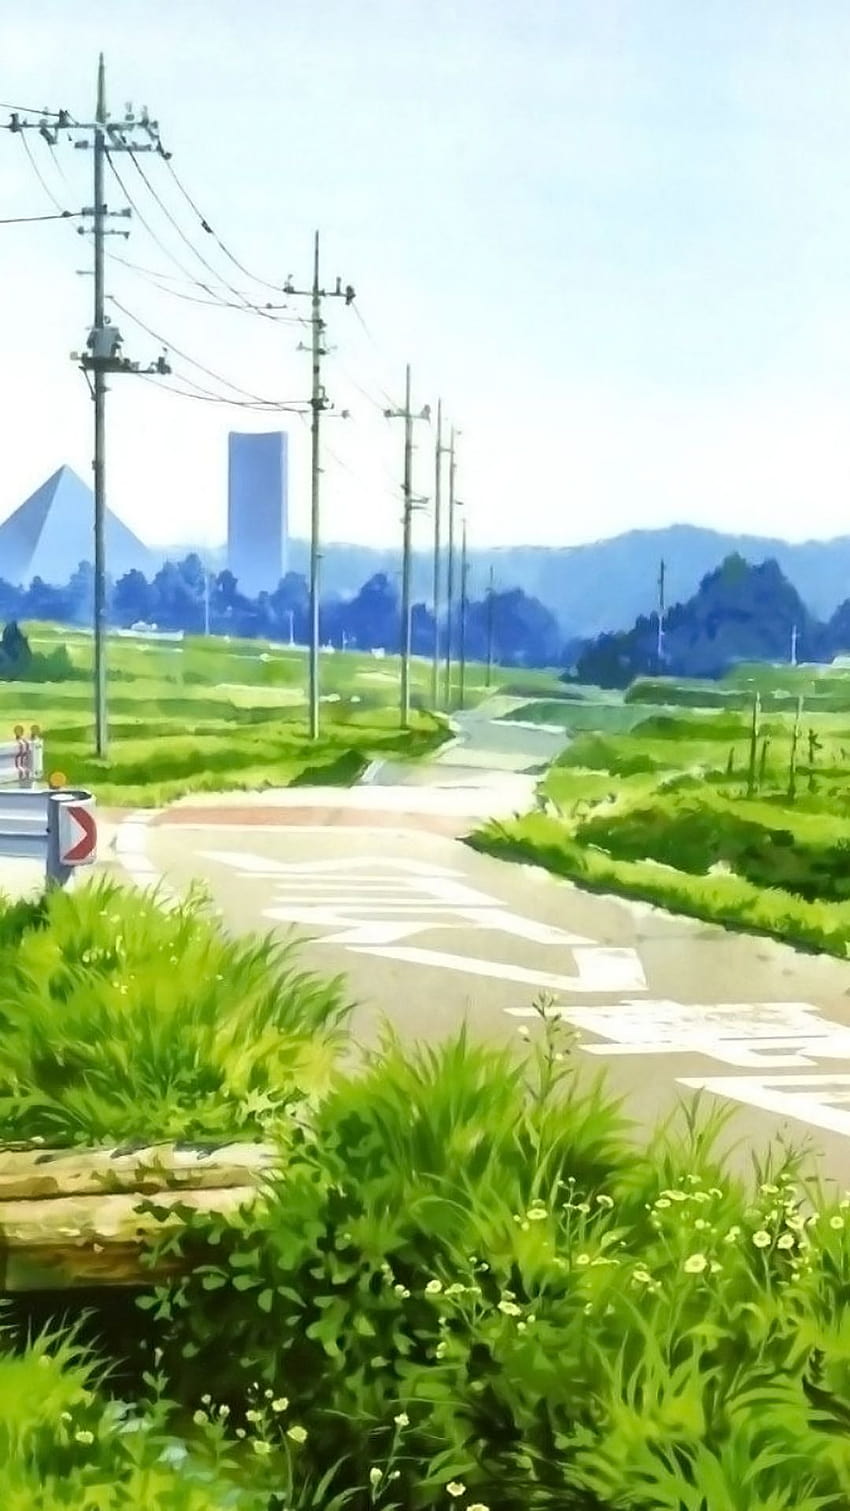 Anime Farm - Other & Anime Background Wallpapers on Desktop Nexus (Image  1437709)